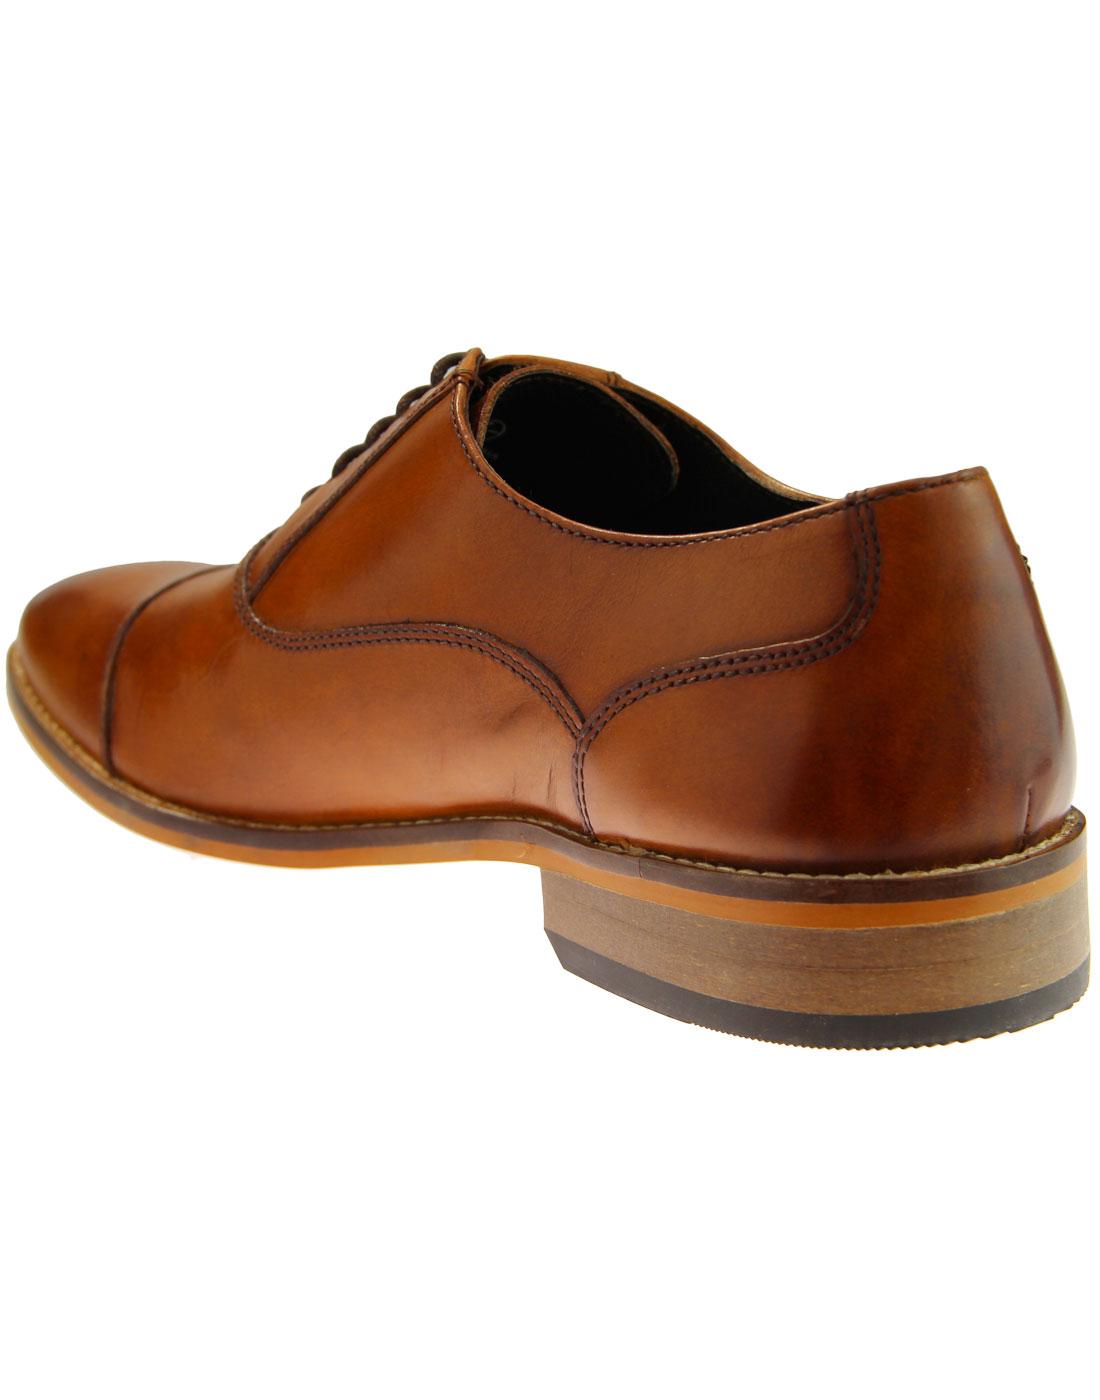 IKON Toby Men's Retro 60s Mod Toe Cap Oxford Shoes in Tan